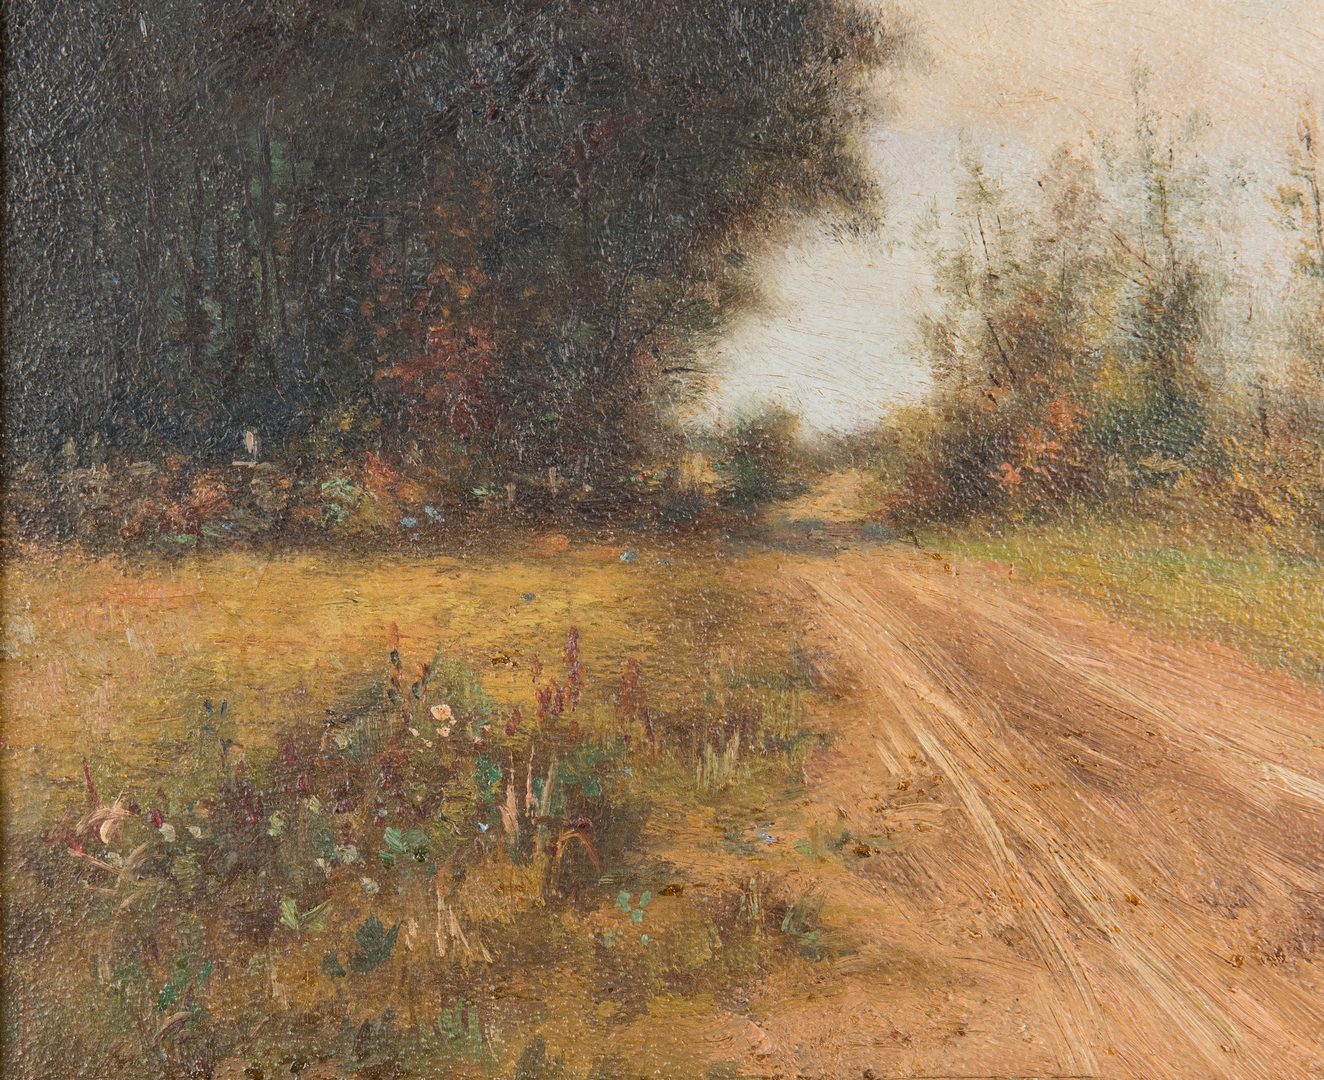 Lot 95: Burr H. Nicholls O/B, Country Road Landscape